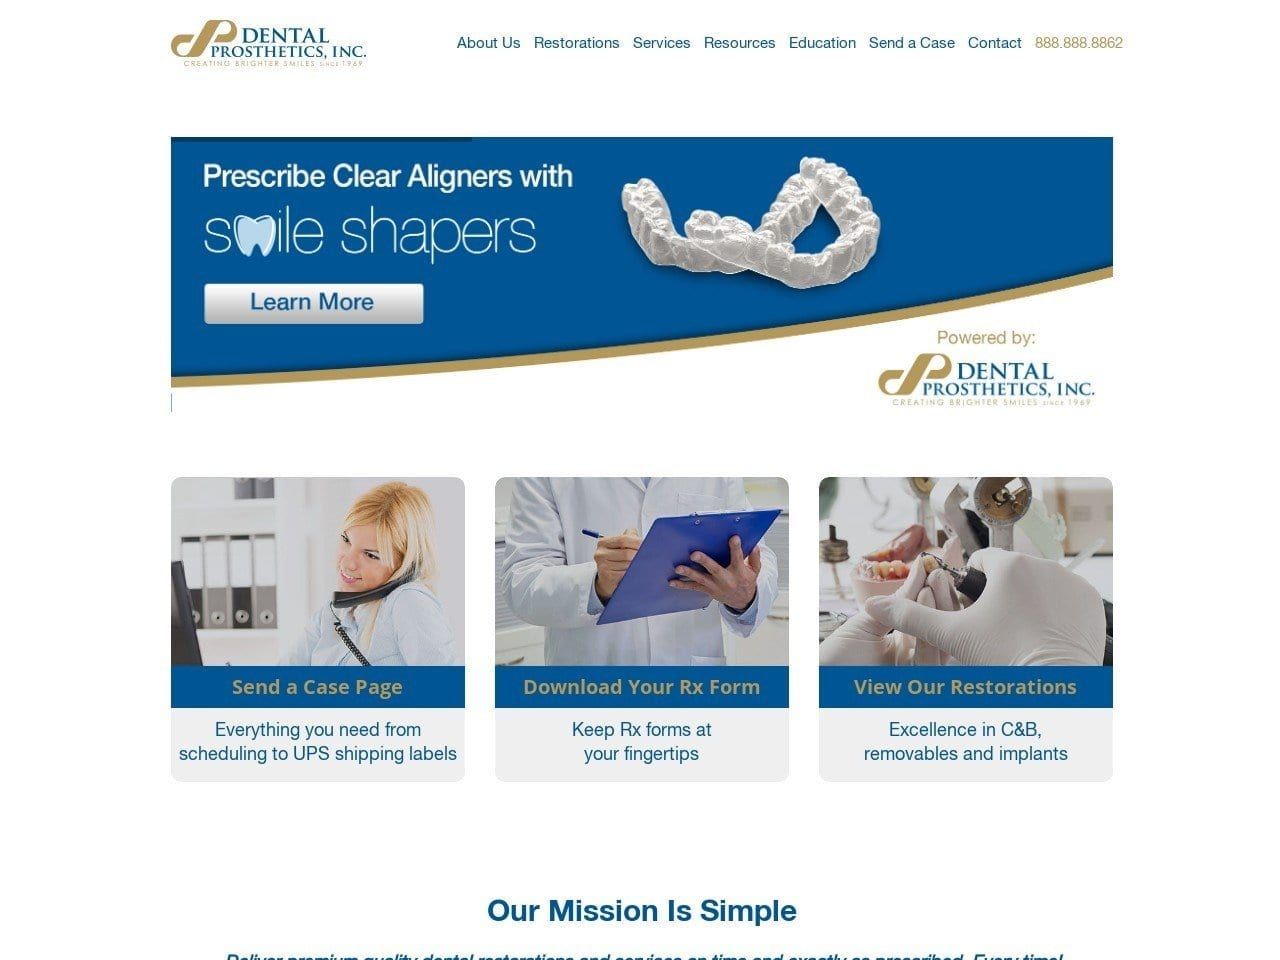 Dental Prosthetics Inc. Website Screenshot from dentalprostheticsinc.com